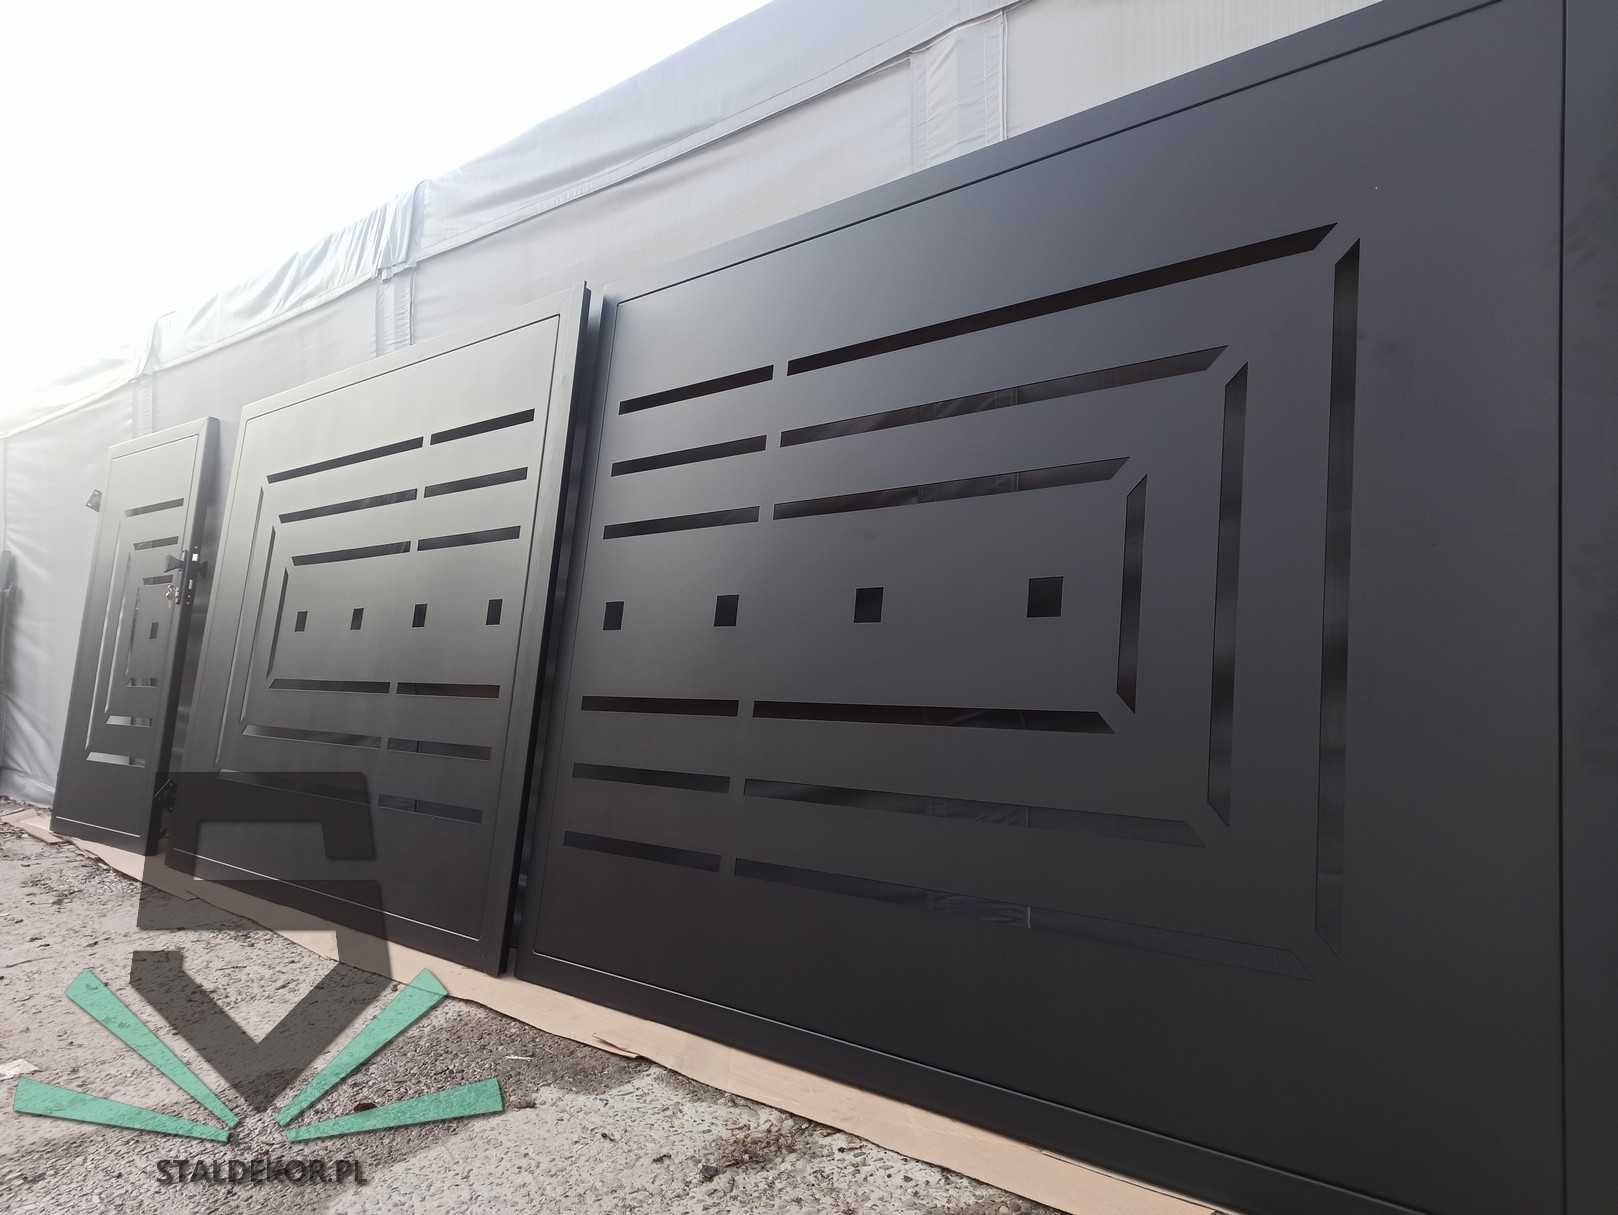 Brama przesuwna 4x1,5m wycinana laserowo, CNC,  panelowa.